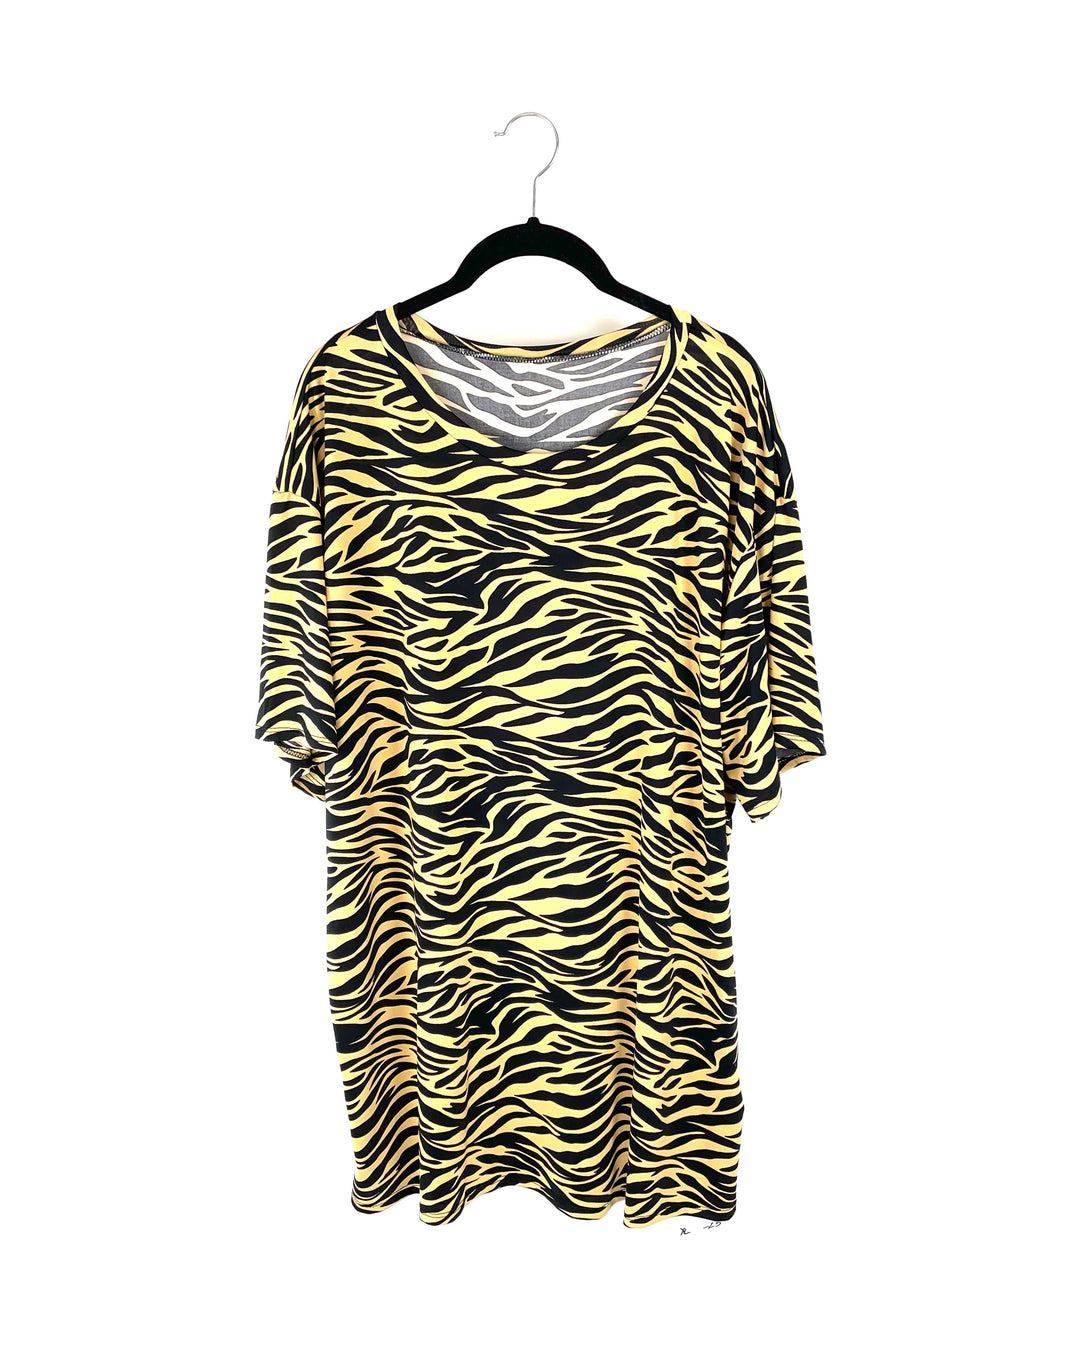 Tan Zebra Print T-Shirt - 1X, 2X , 3X